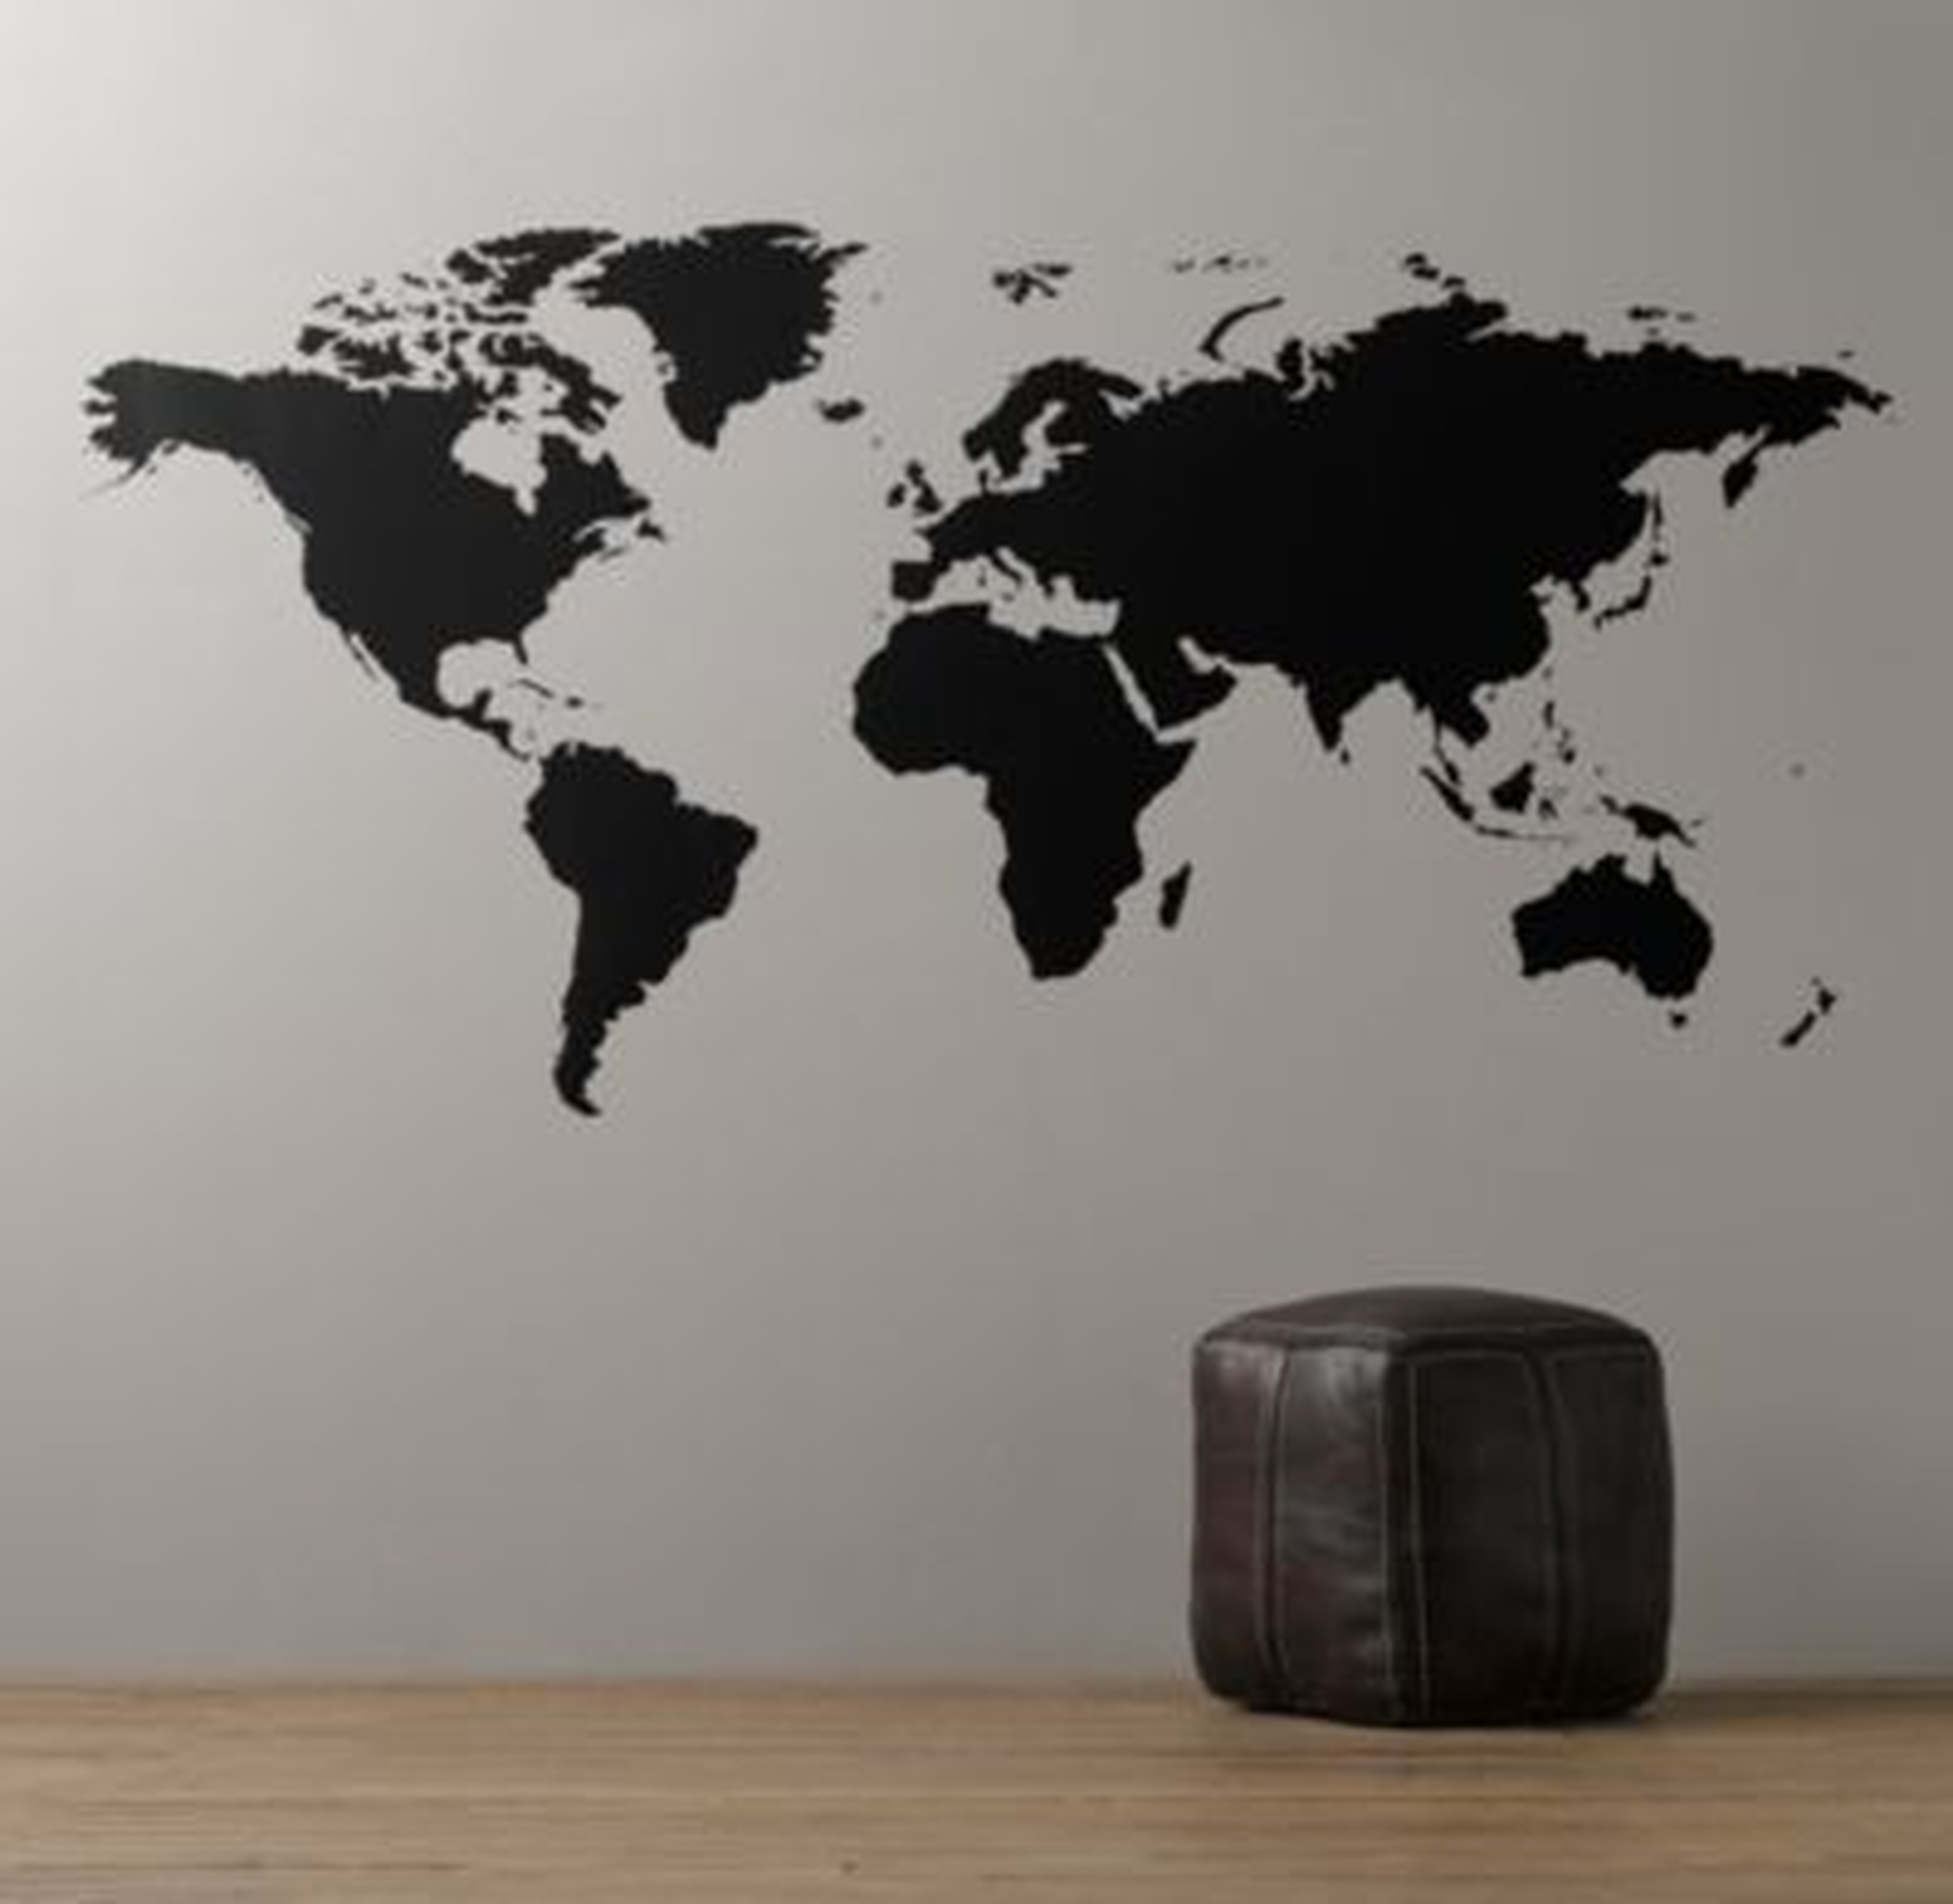 World map chalkboard decal - 8" - RH Baby & Child